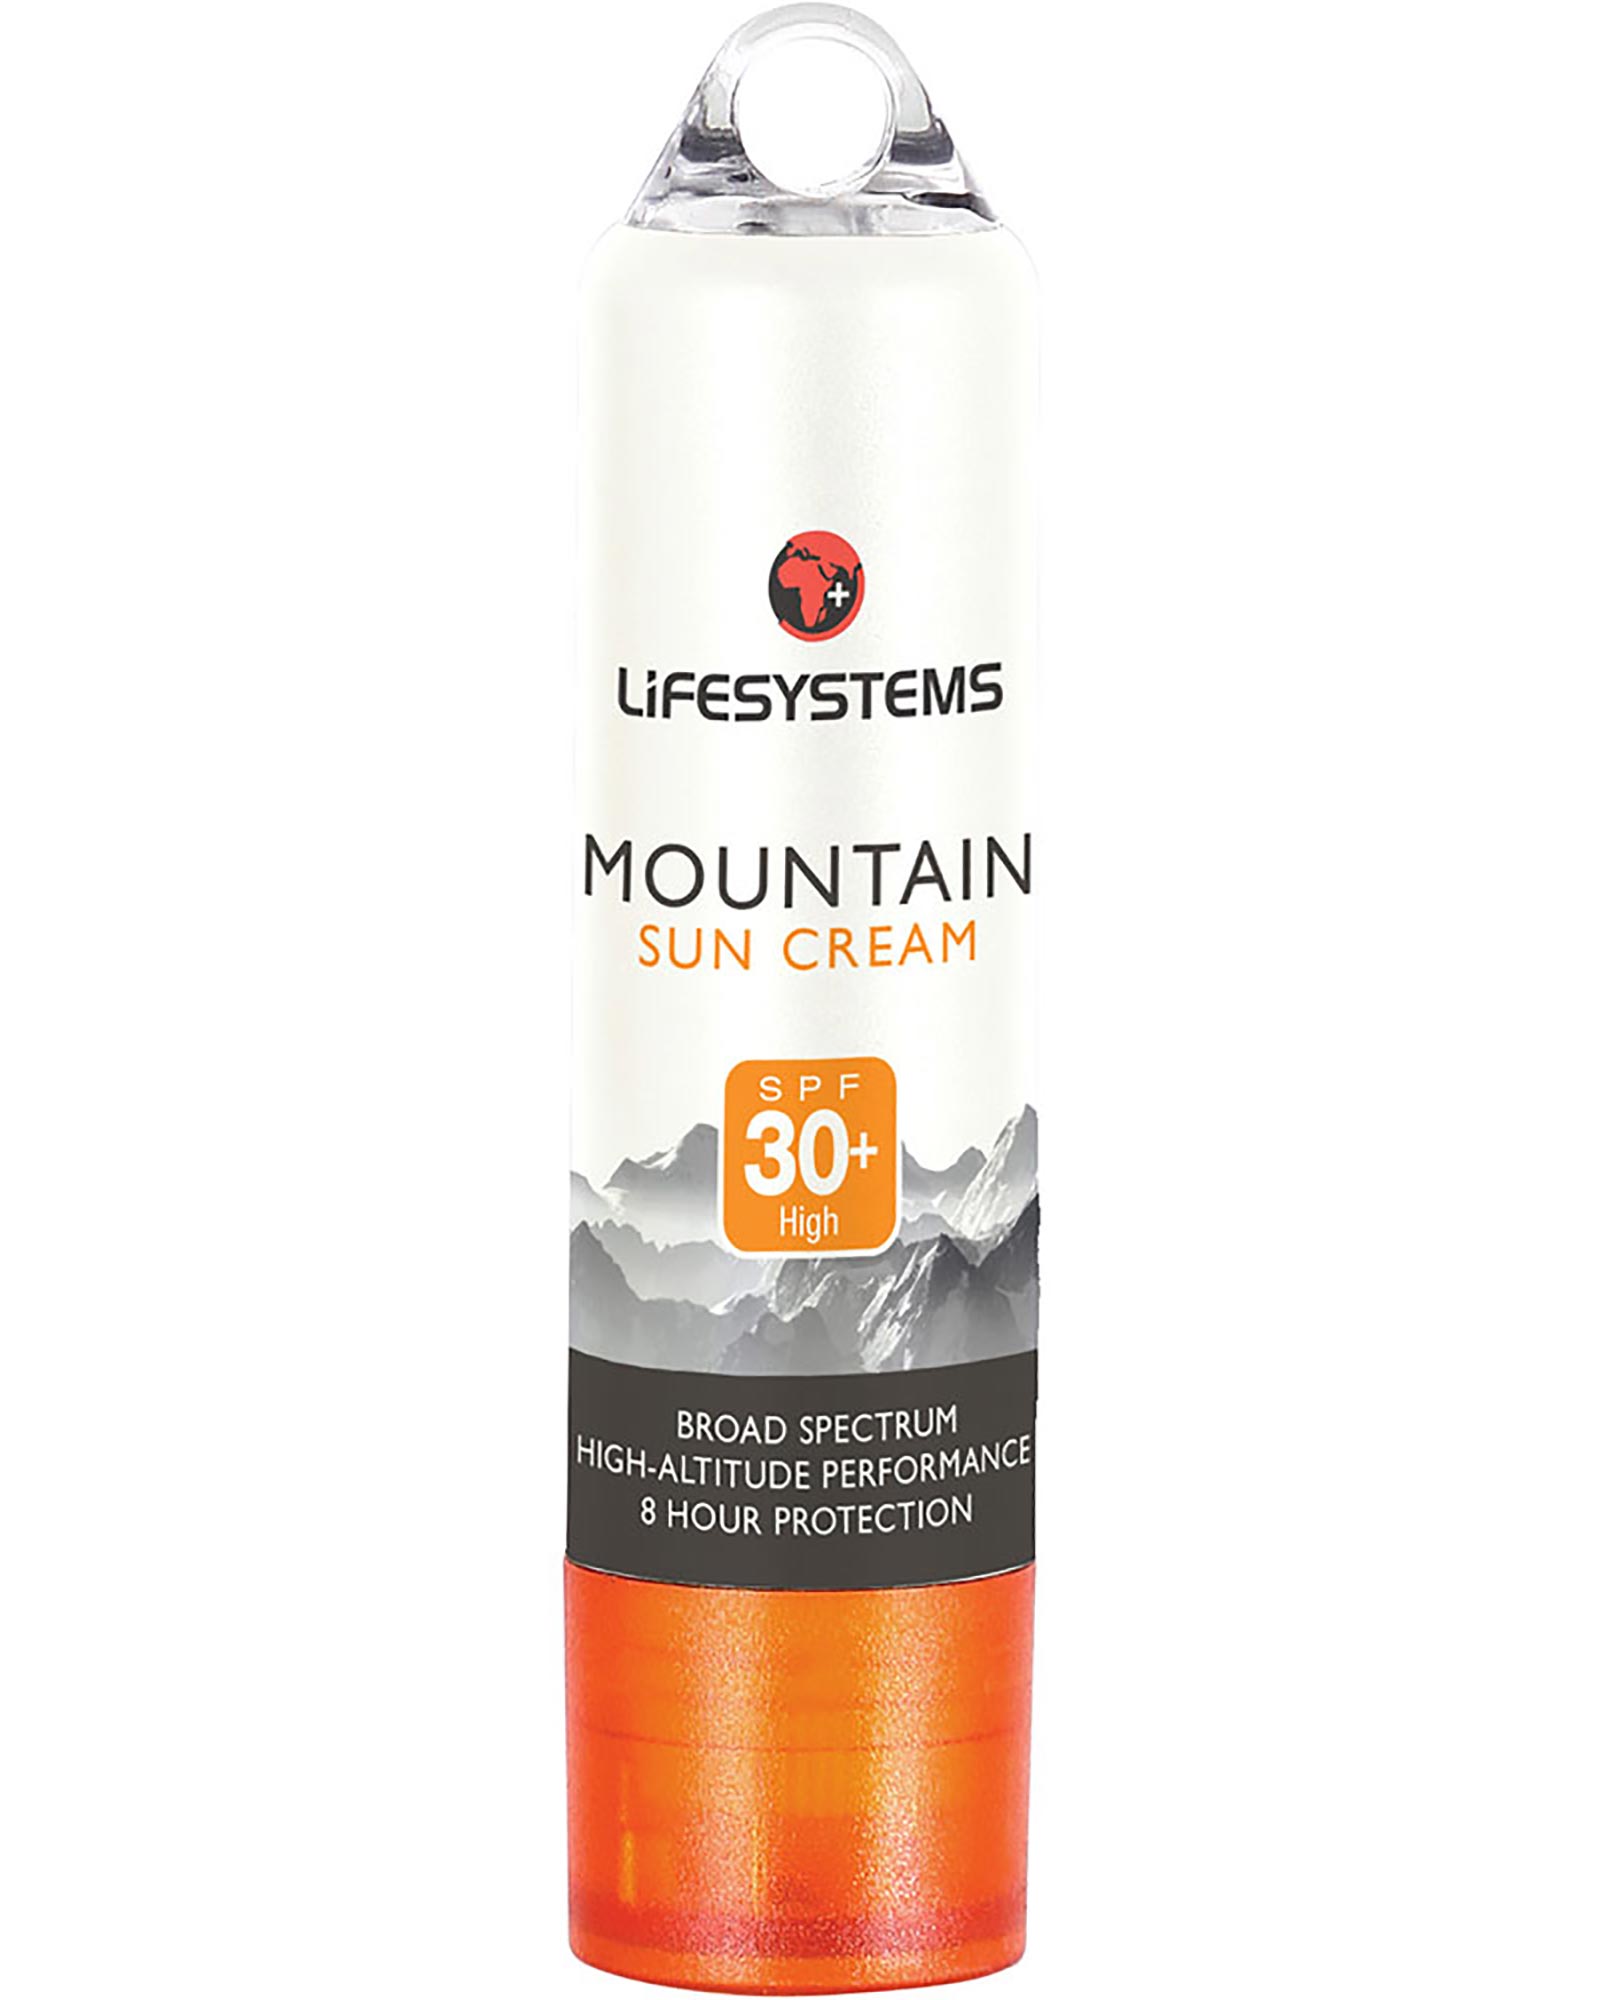 Lifesystems Mountain SPF 30 Sun Stick